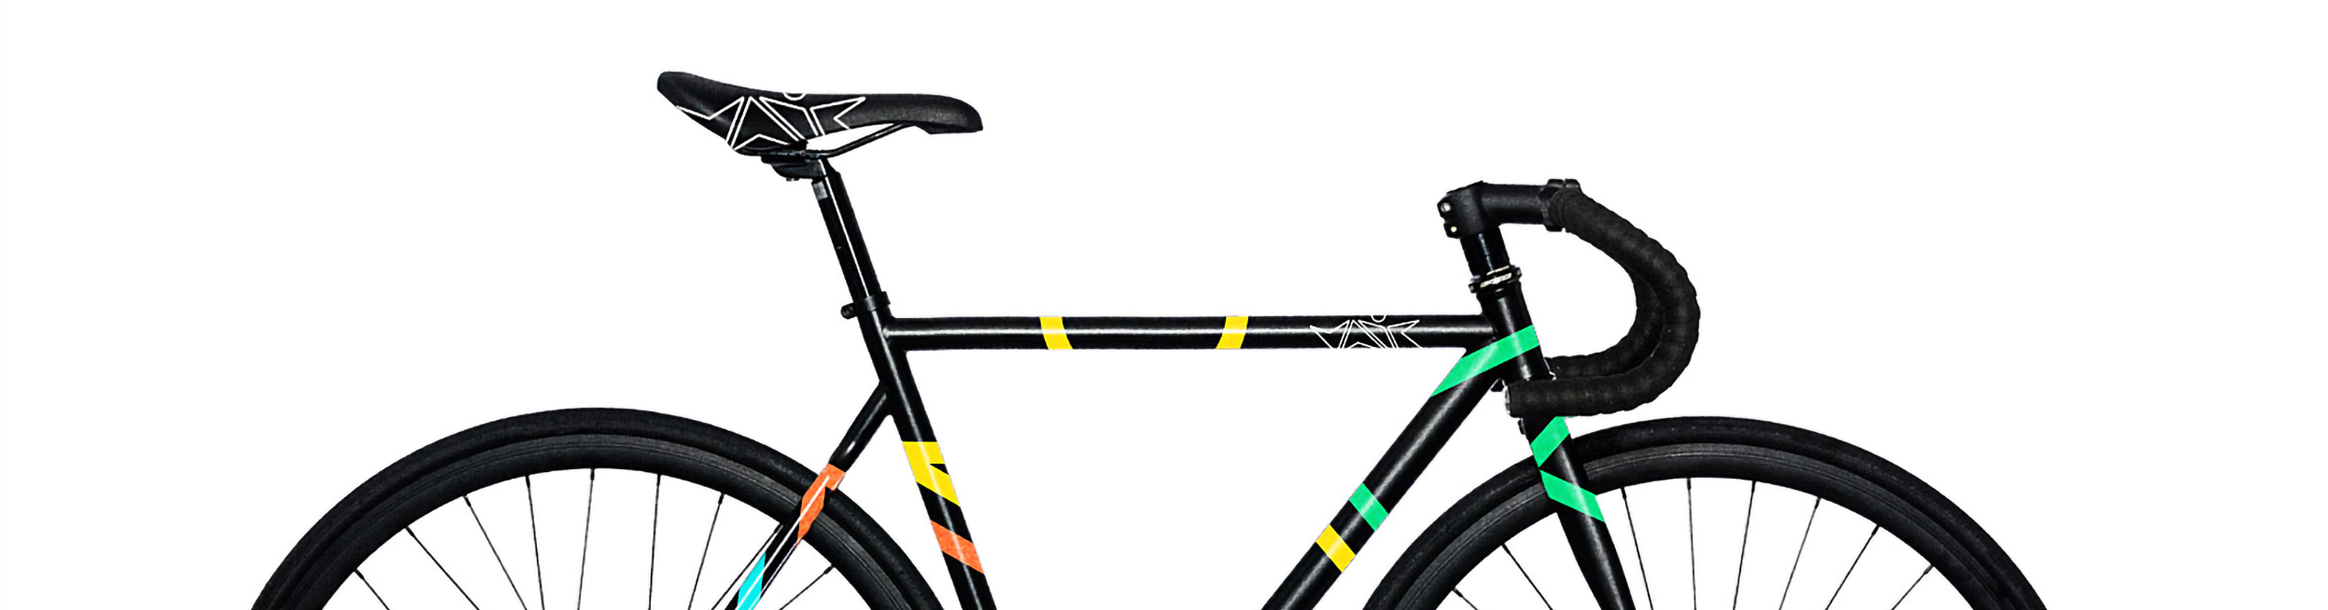 Vaik Bicycles project header image